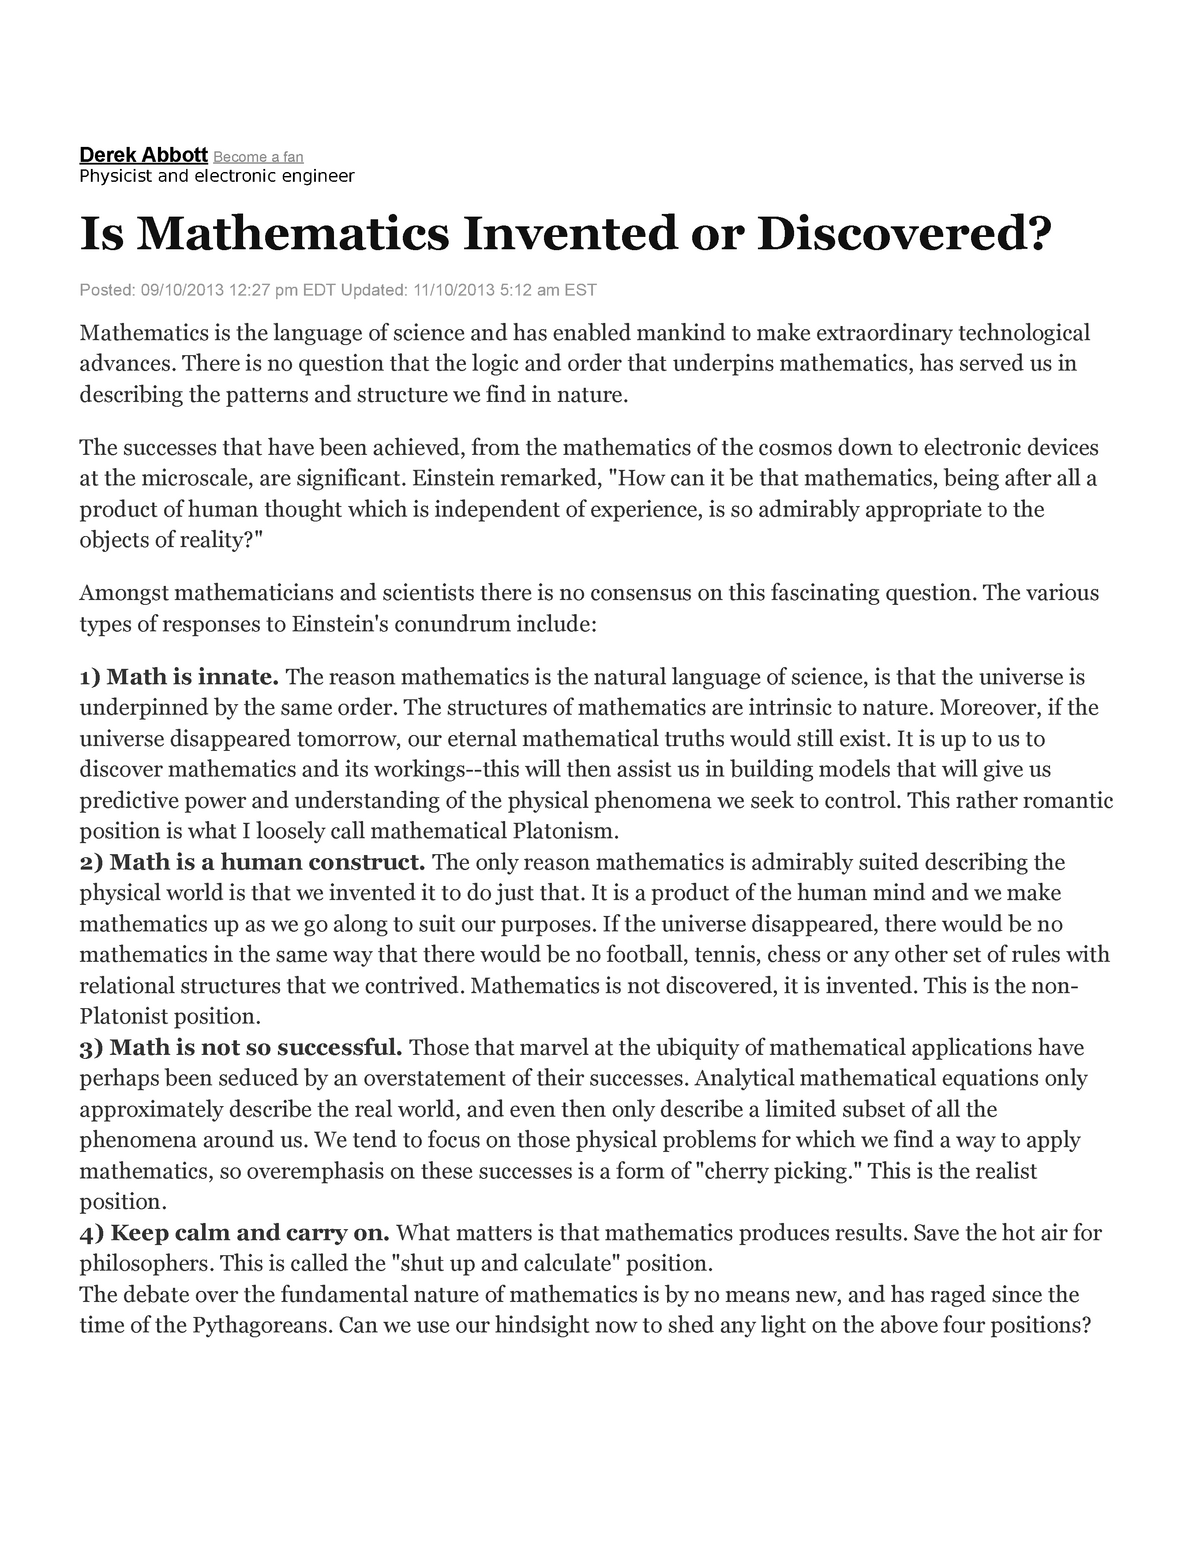 mathematics is discovered essay